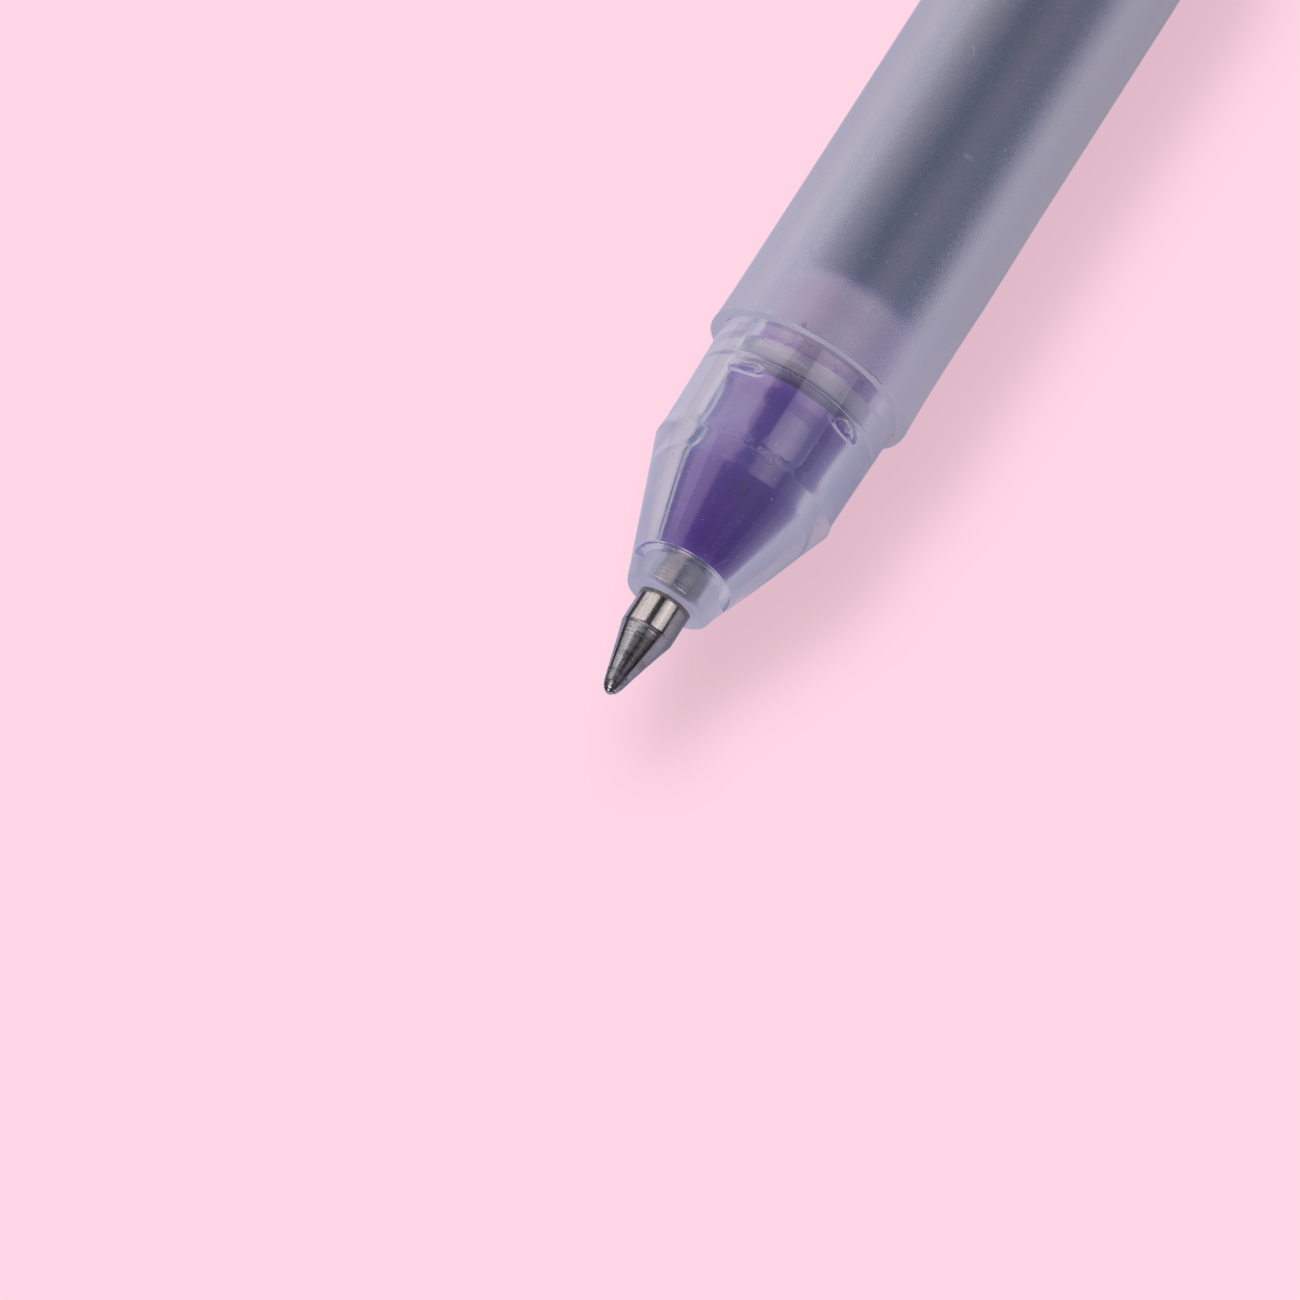 Color Scheme Pen Set - Lavender Fields - Stationery Pal